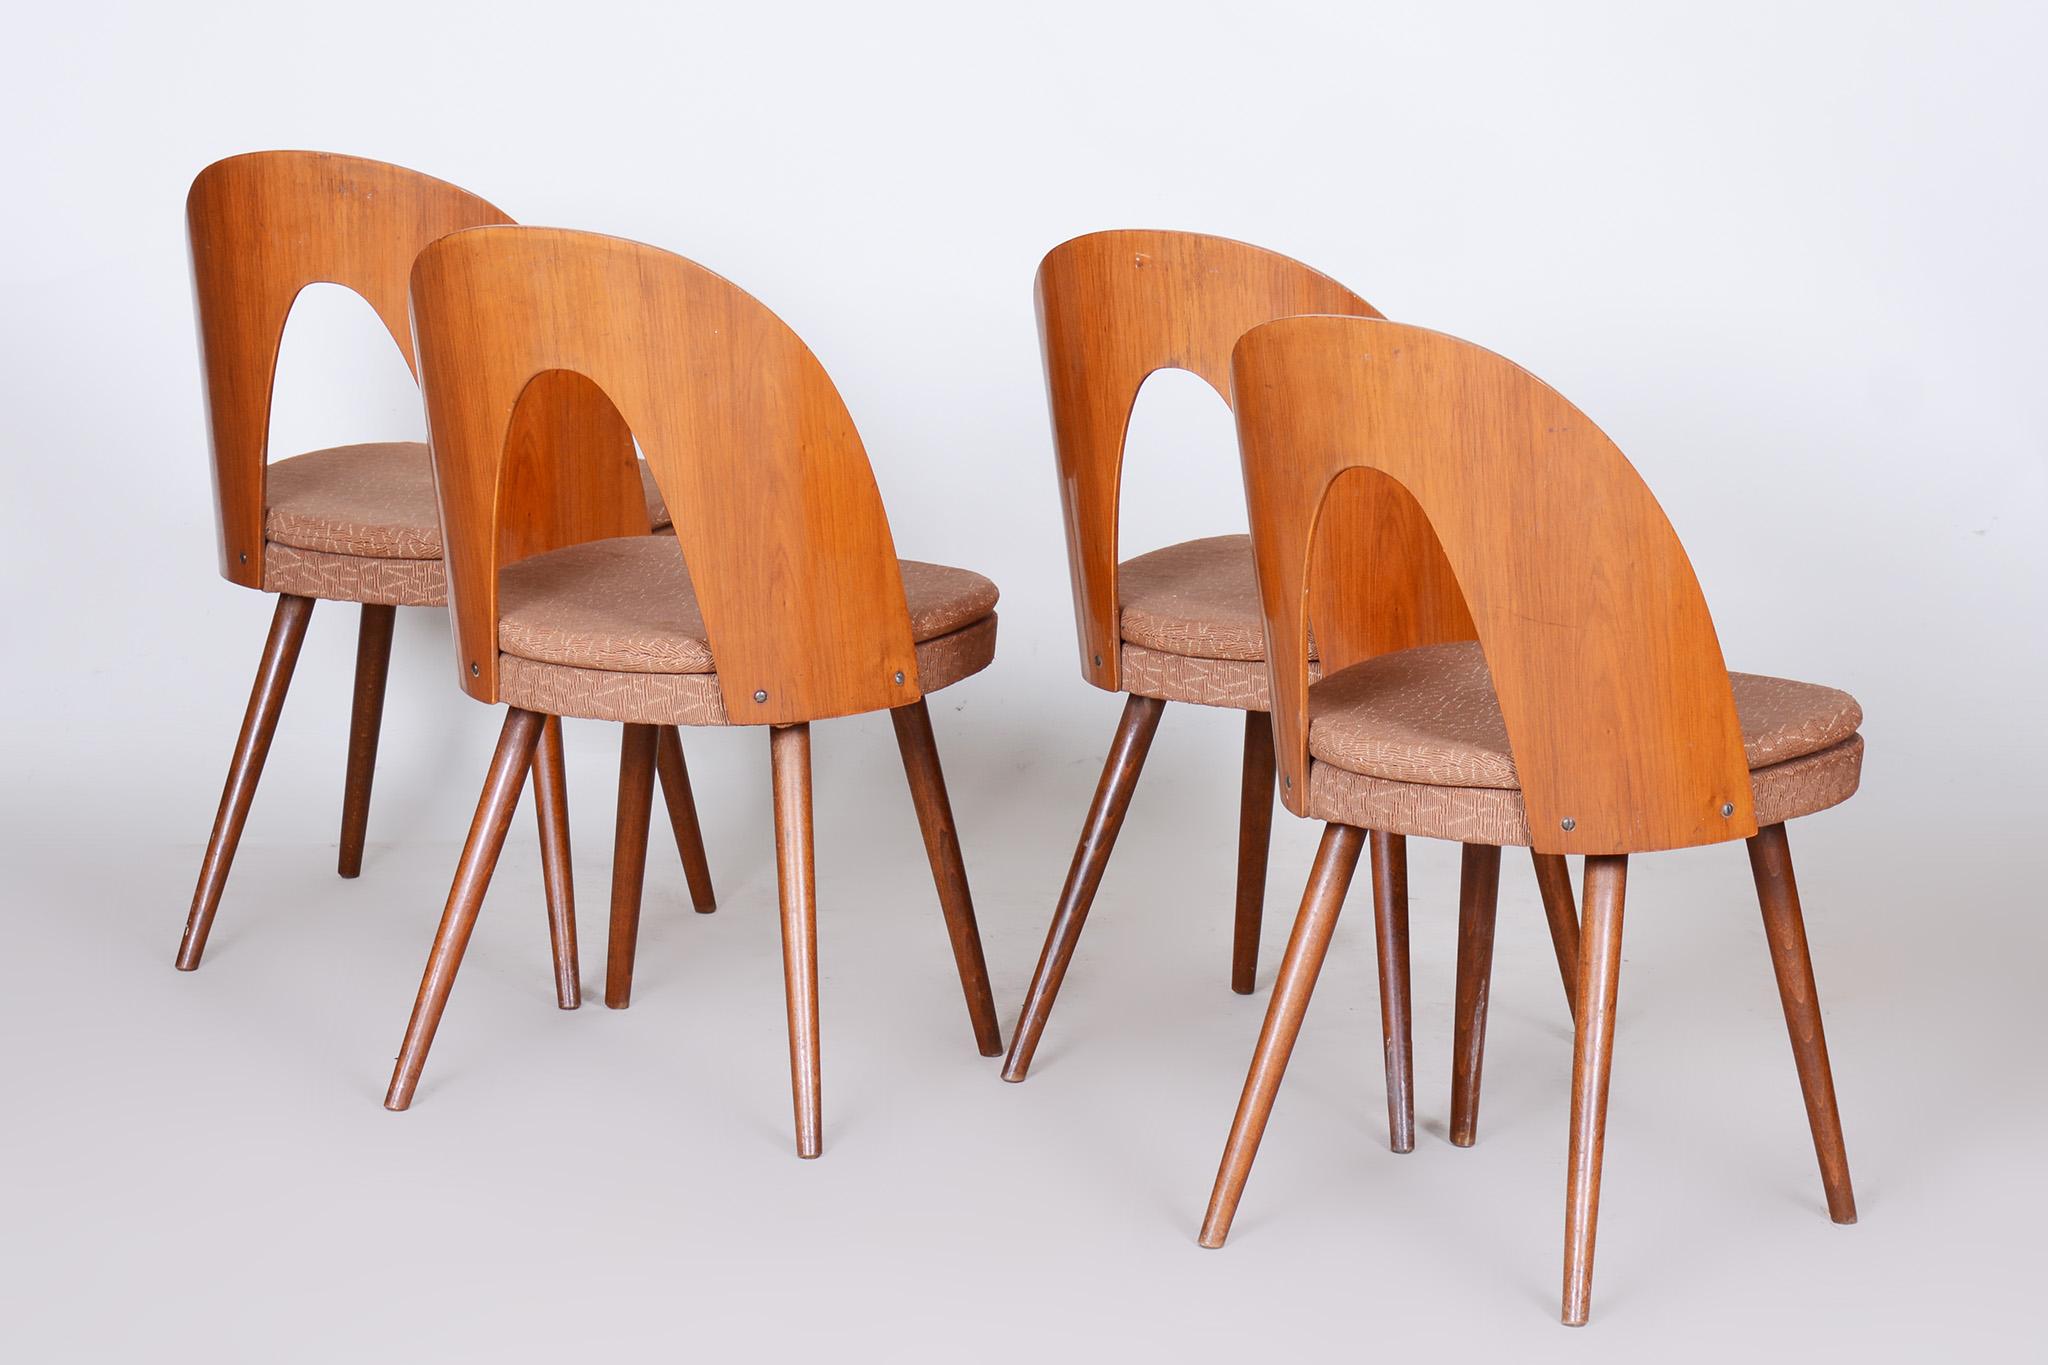 Set of Four Mid-Century Modern Chairs Made in 1950s Czechia by Antonín Šuman For Sale 3